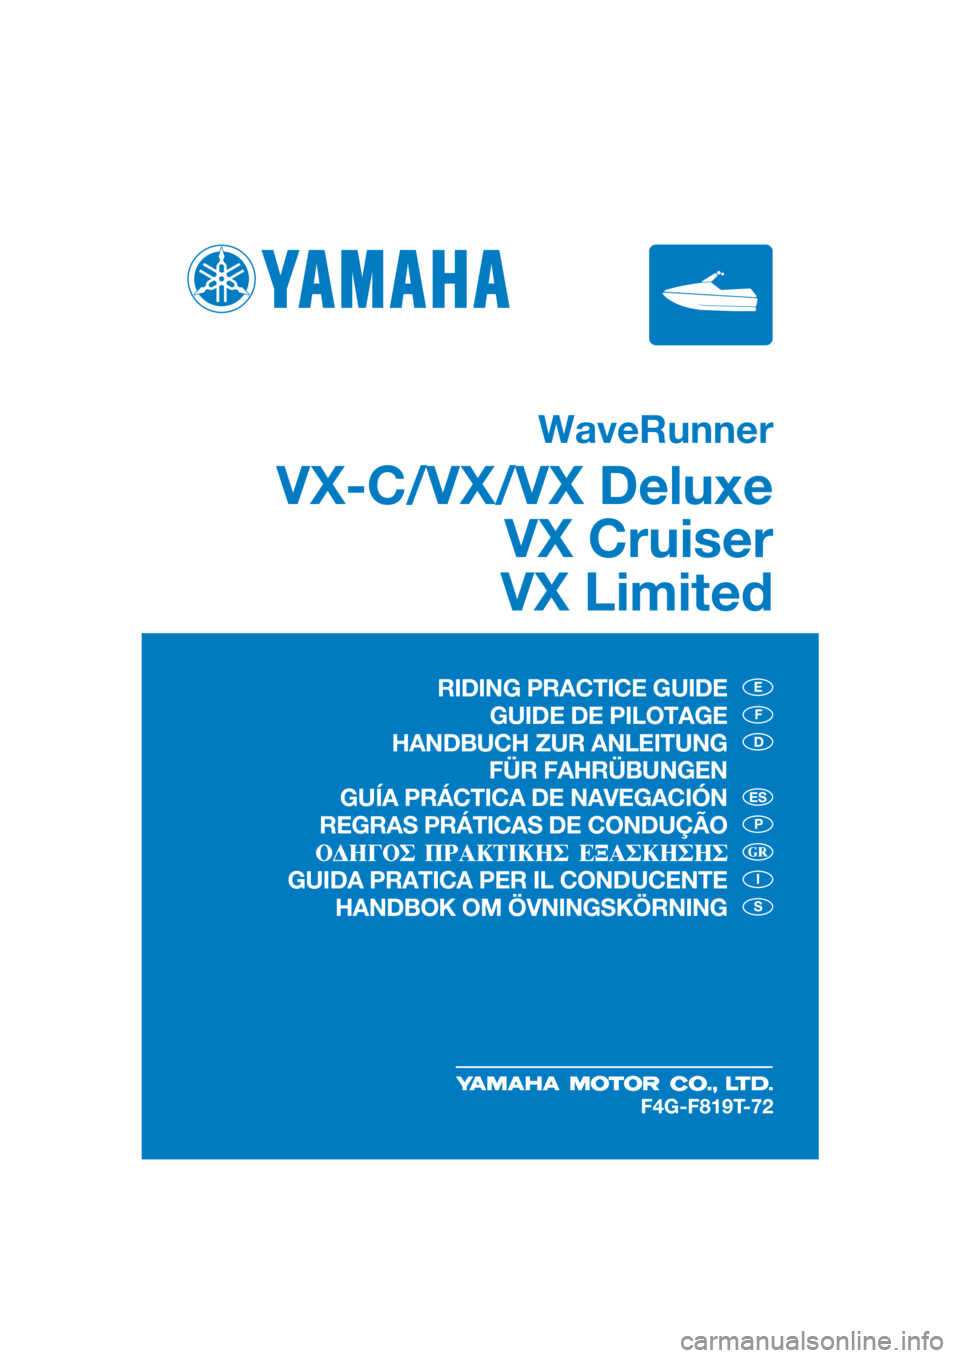 YAMAHA VX DELUXE 2020  Manuale de Empleo (in Spanish) WaveRunner
VX-C/VX/VX Deluxe
VX Cruiser
VX Limited
E
F
D
P
I
S
ES
F4G-F819T-72
RIDING PRACTICE GUIDE
GUIDE DE PILOTAGE
HANDBUCH ZUR ANLEITUNG
 FÜR FAHRÜBUNGEN
GUÍA PRÁCTICA DE NAVEGACIÓN
REGRAS P